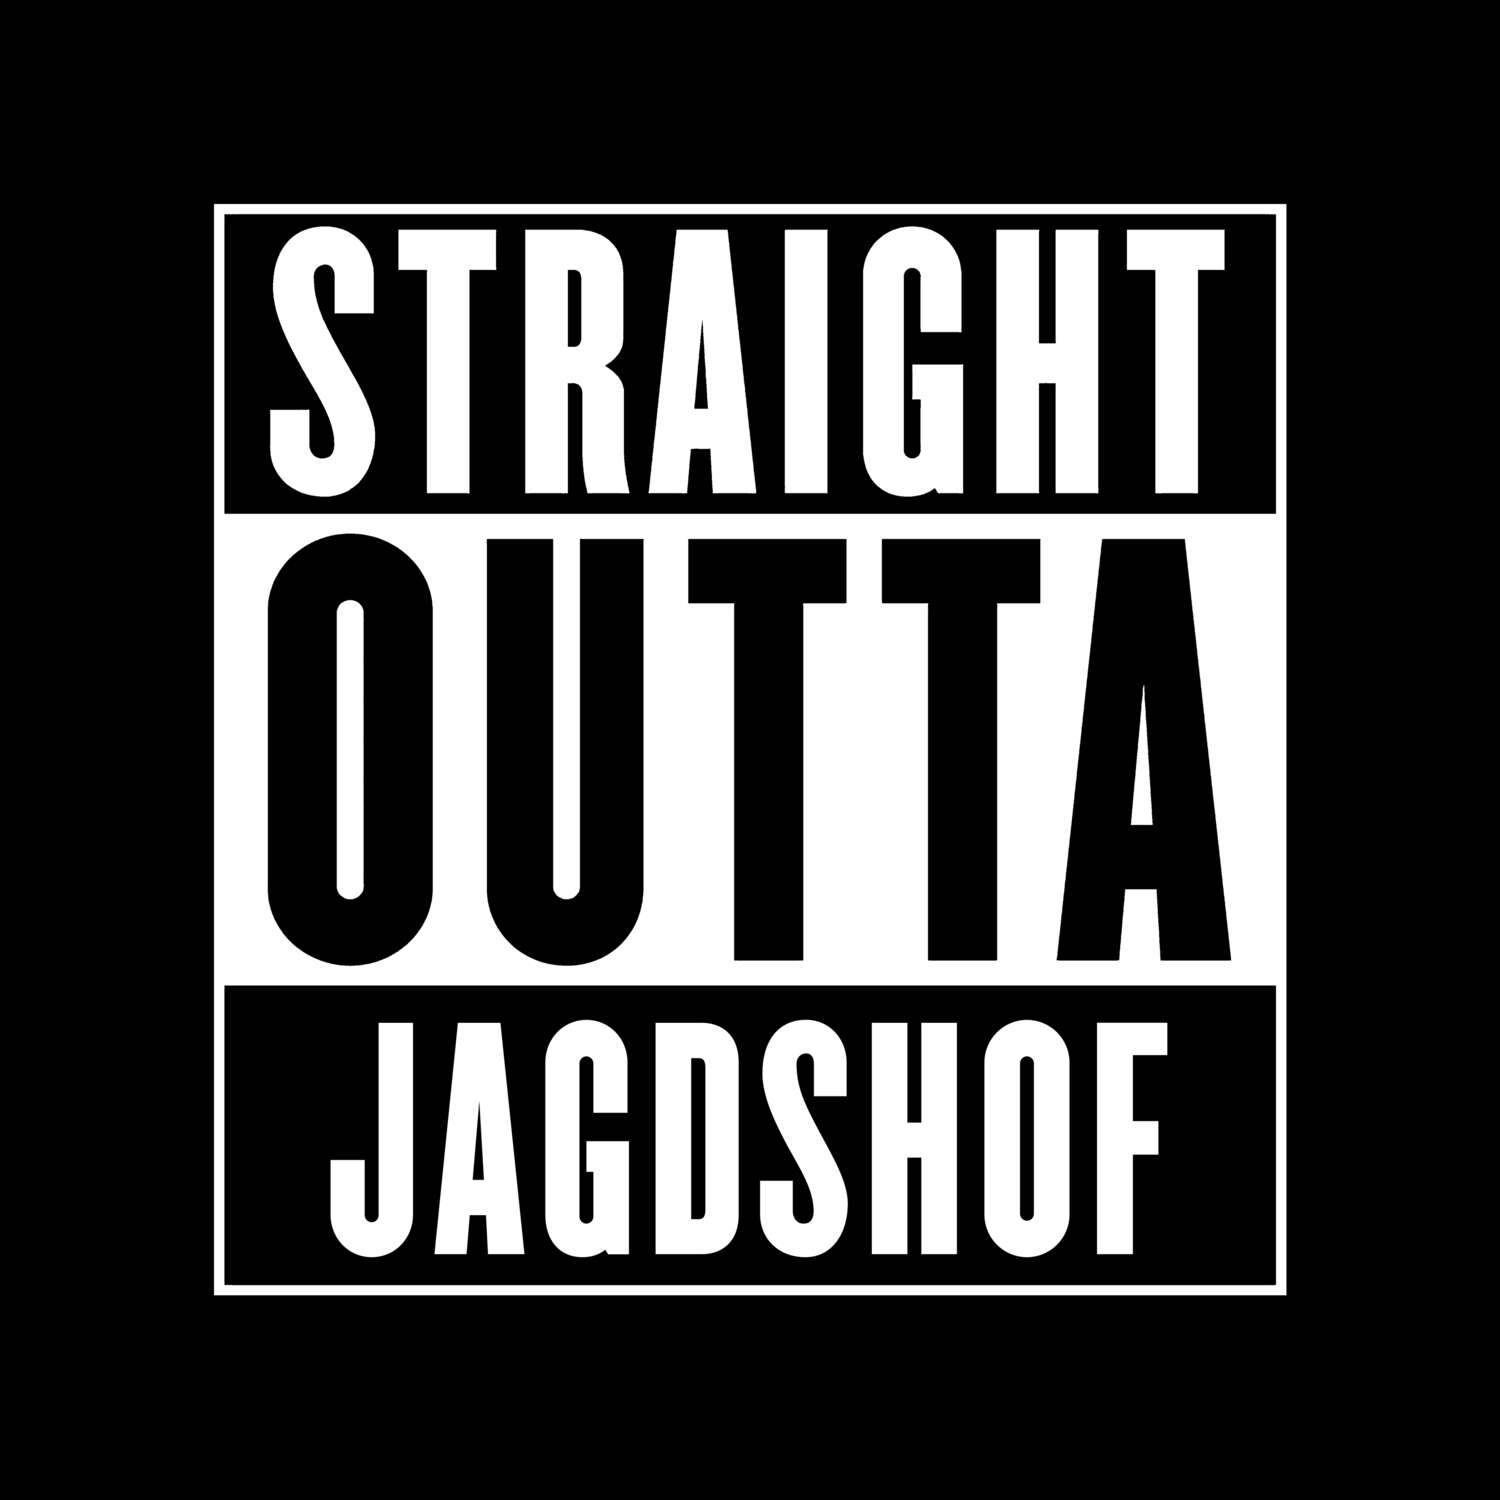 Jagdshof T-Shirt »Straight Outta«